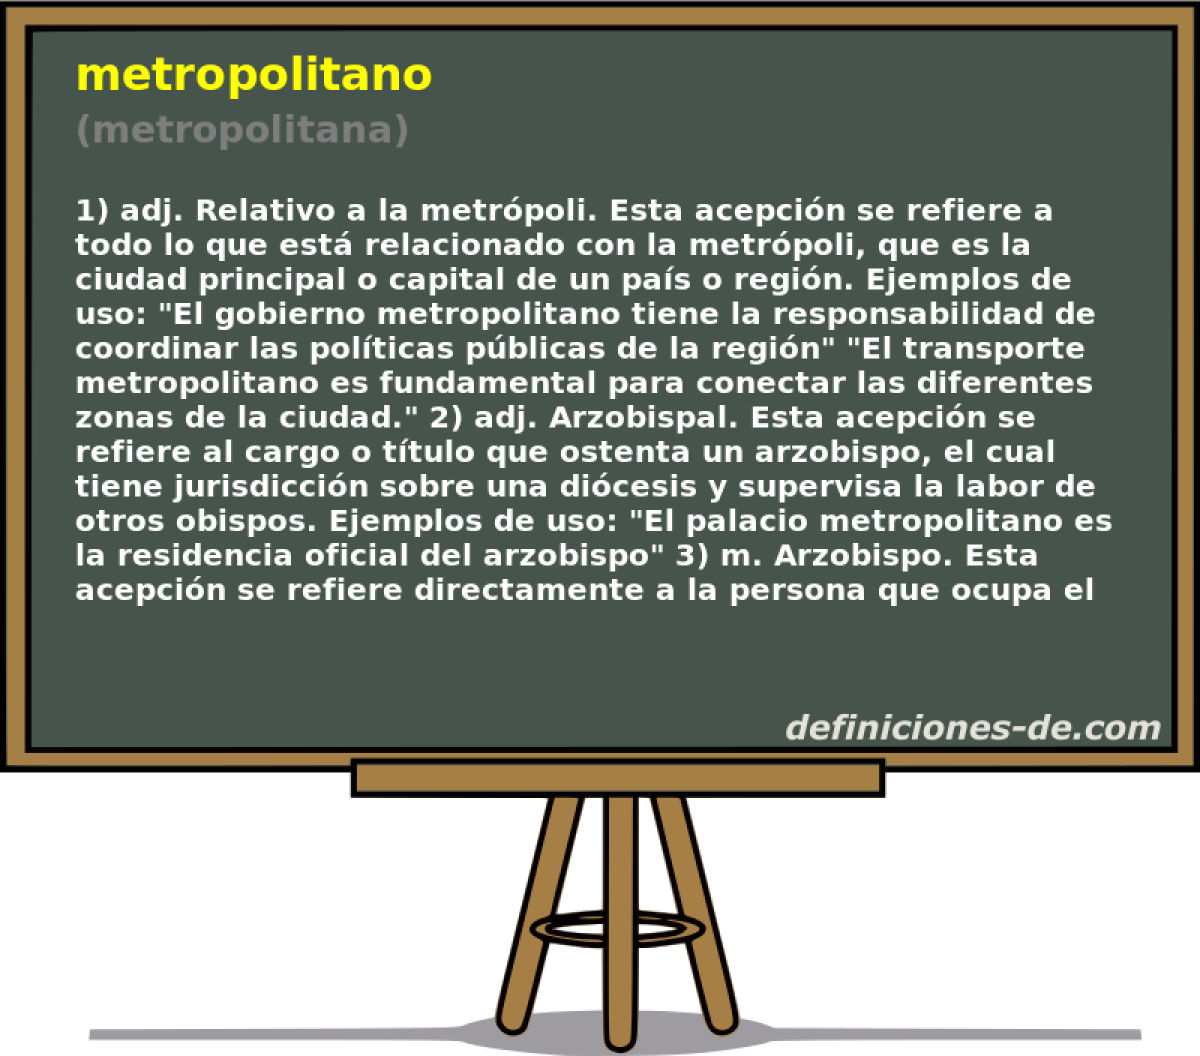 metropolitano (metropolitana)